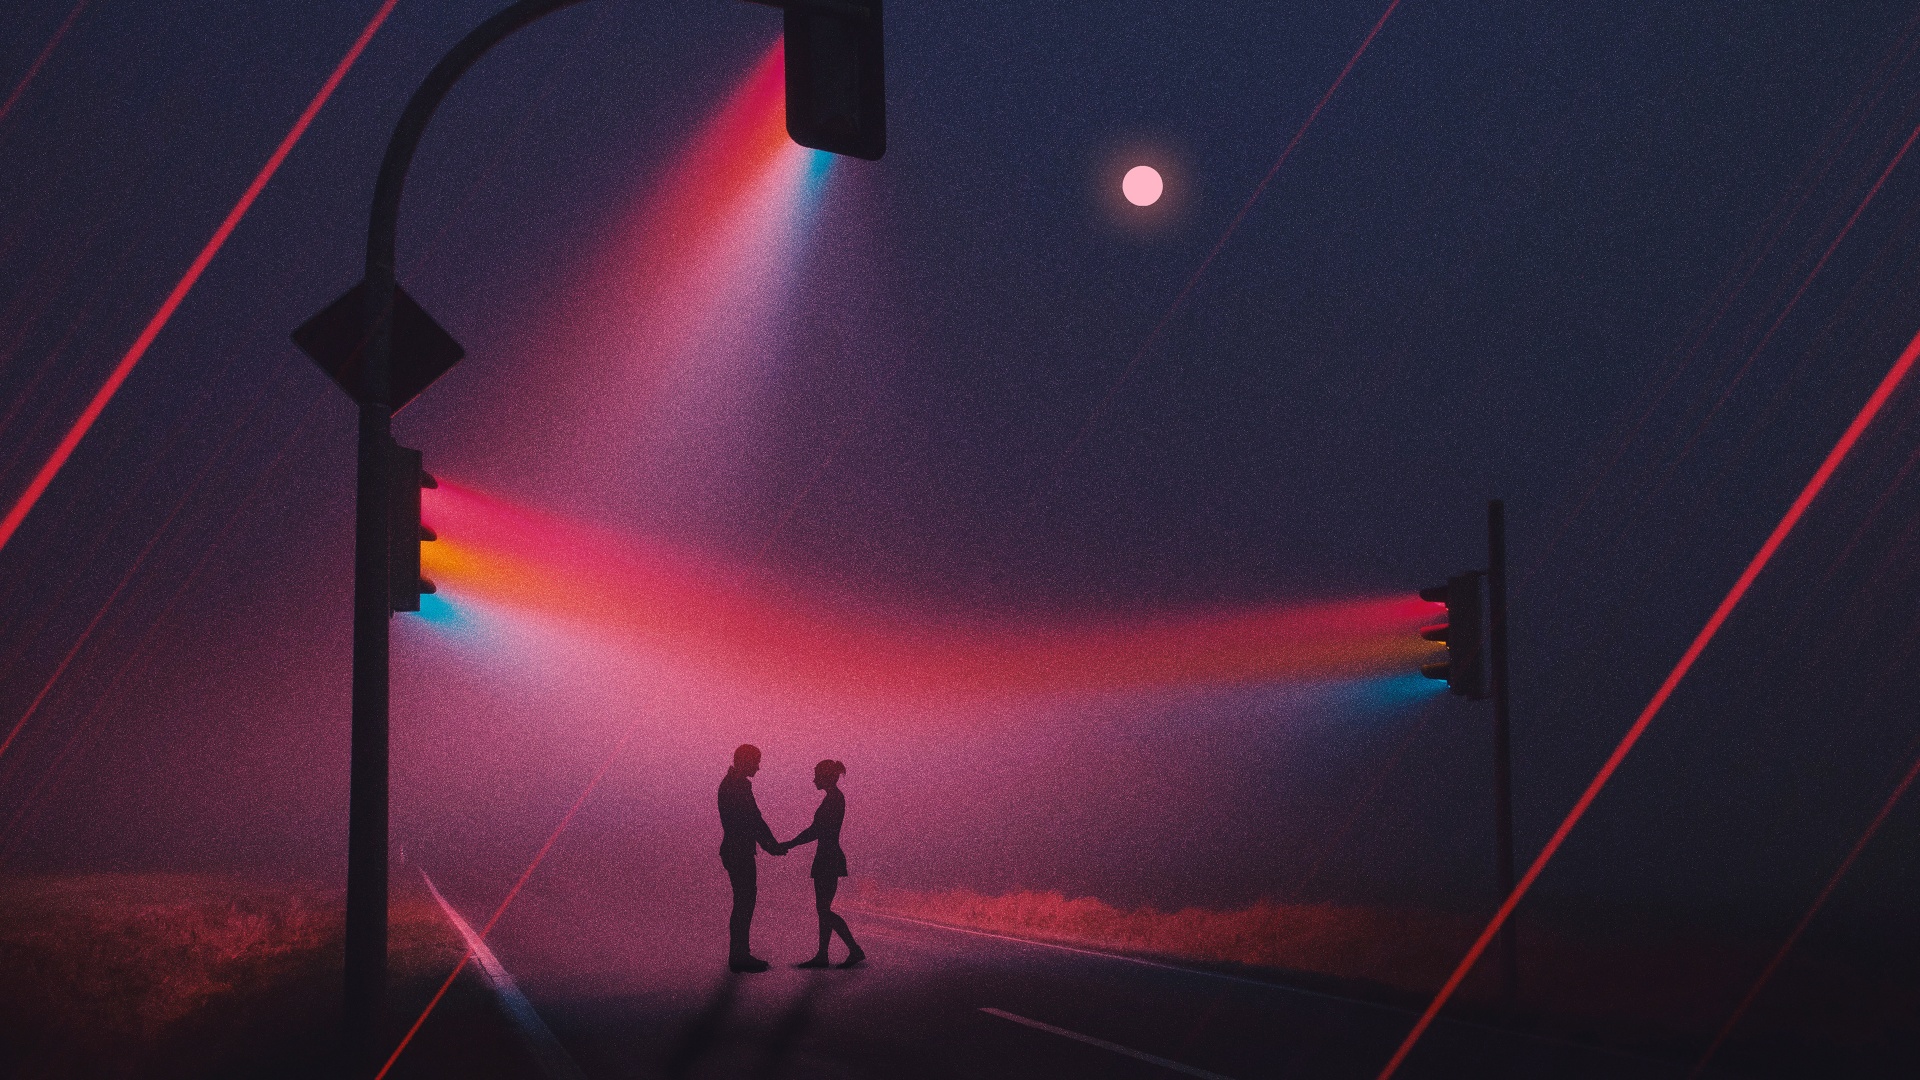 Couple 4K Wallpaper, Silhouette, Traffic lights, Night, Romantic, Focus,  Spectrum, Moon, Road, Love, #138